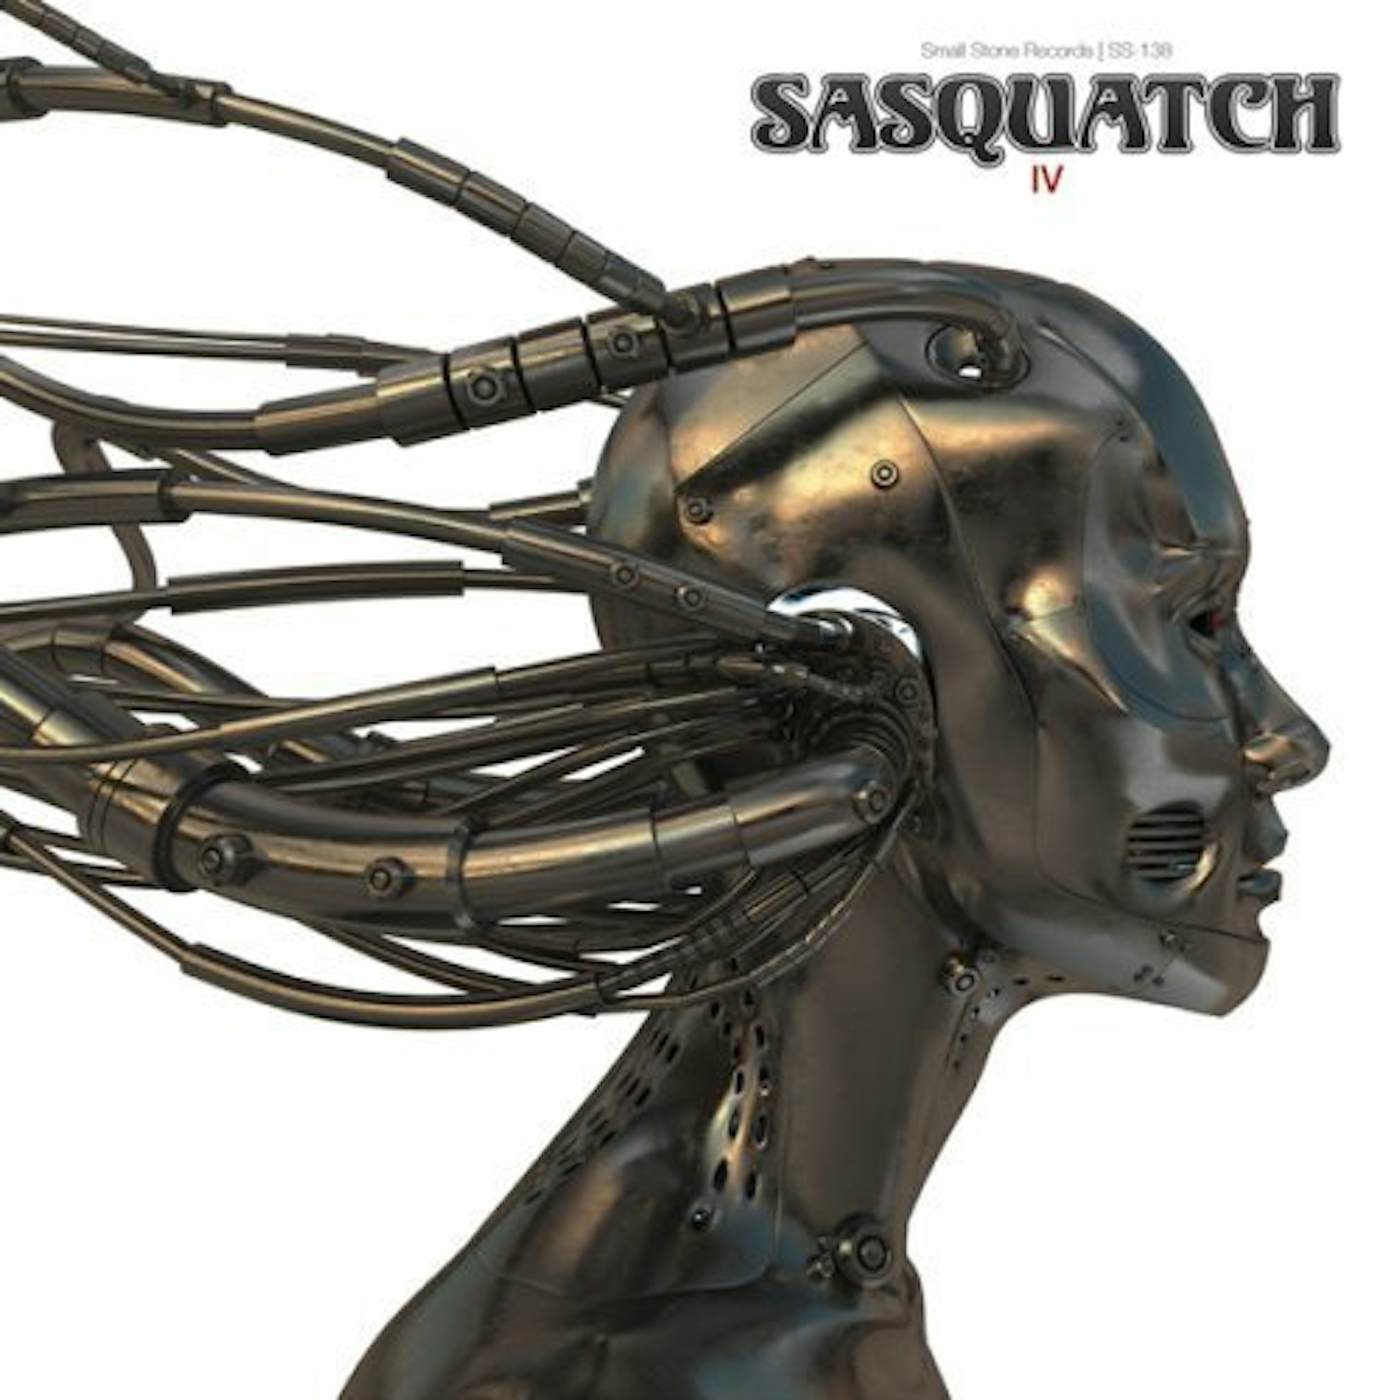 Sasquatch IV CD